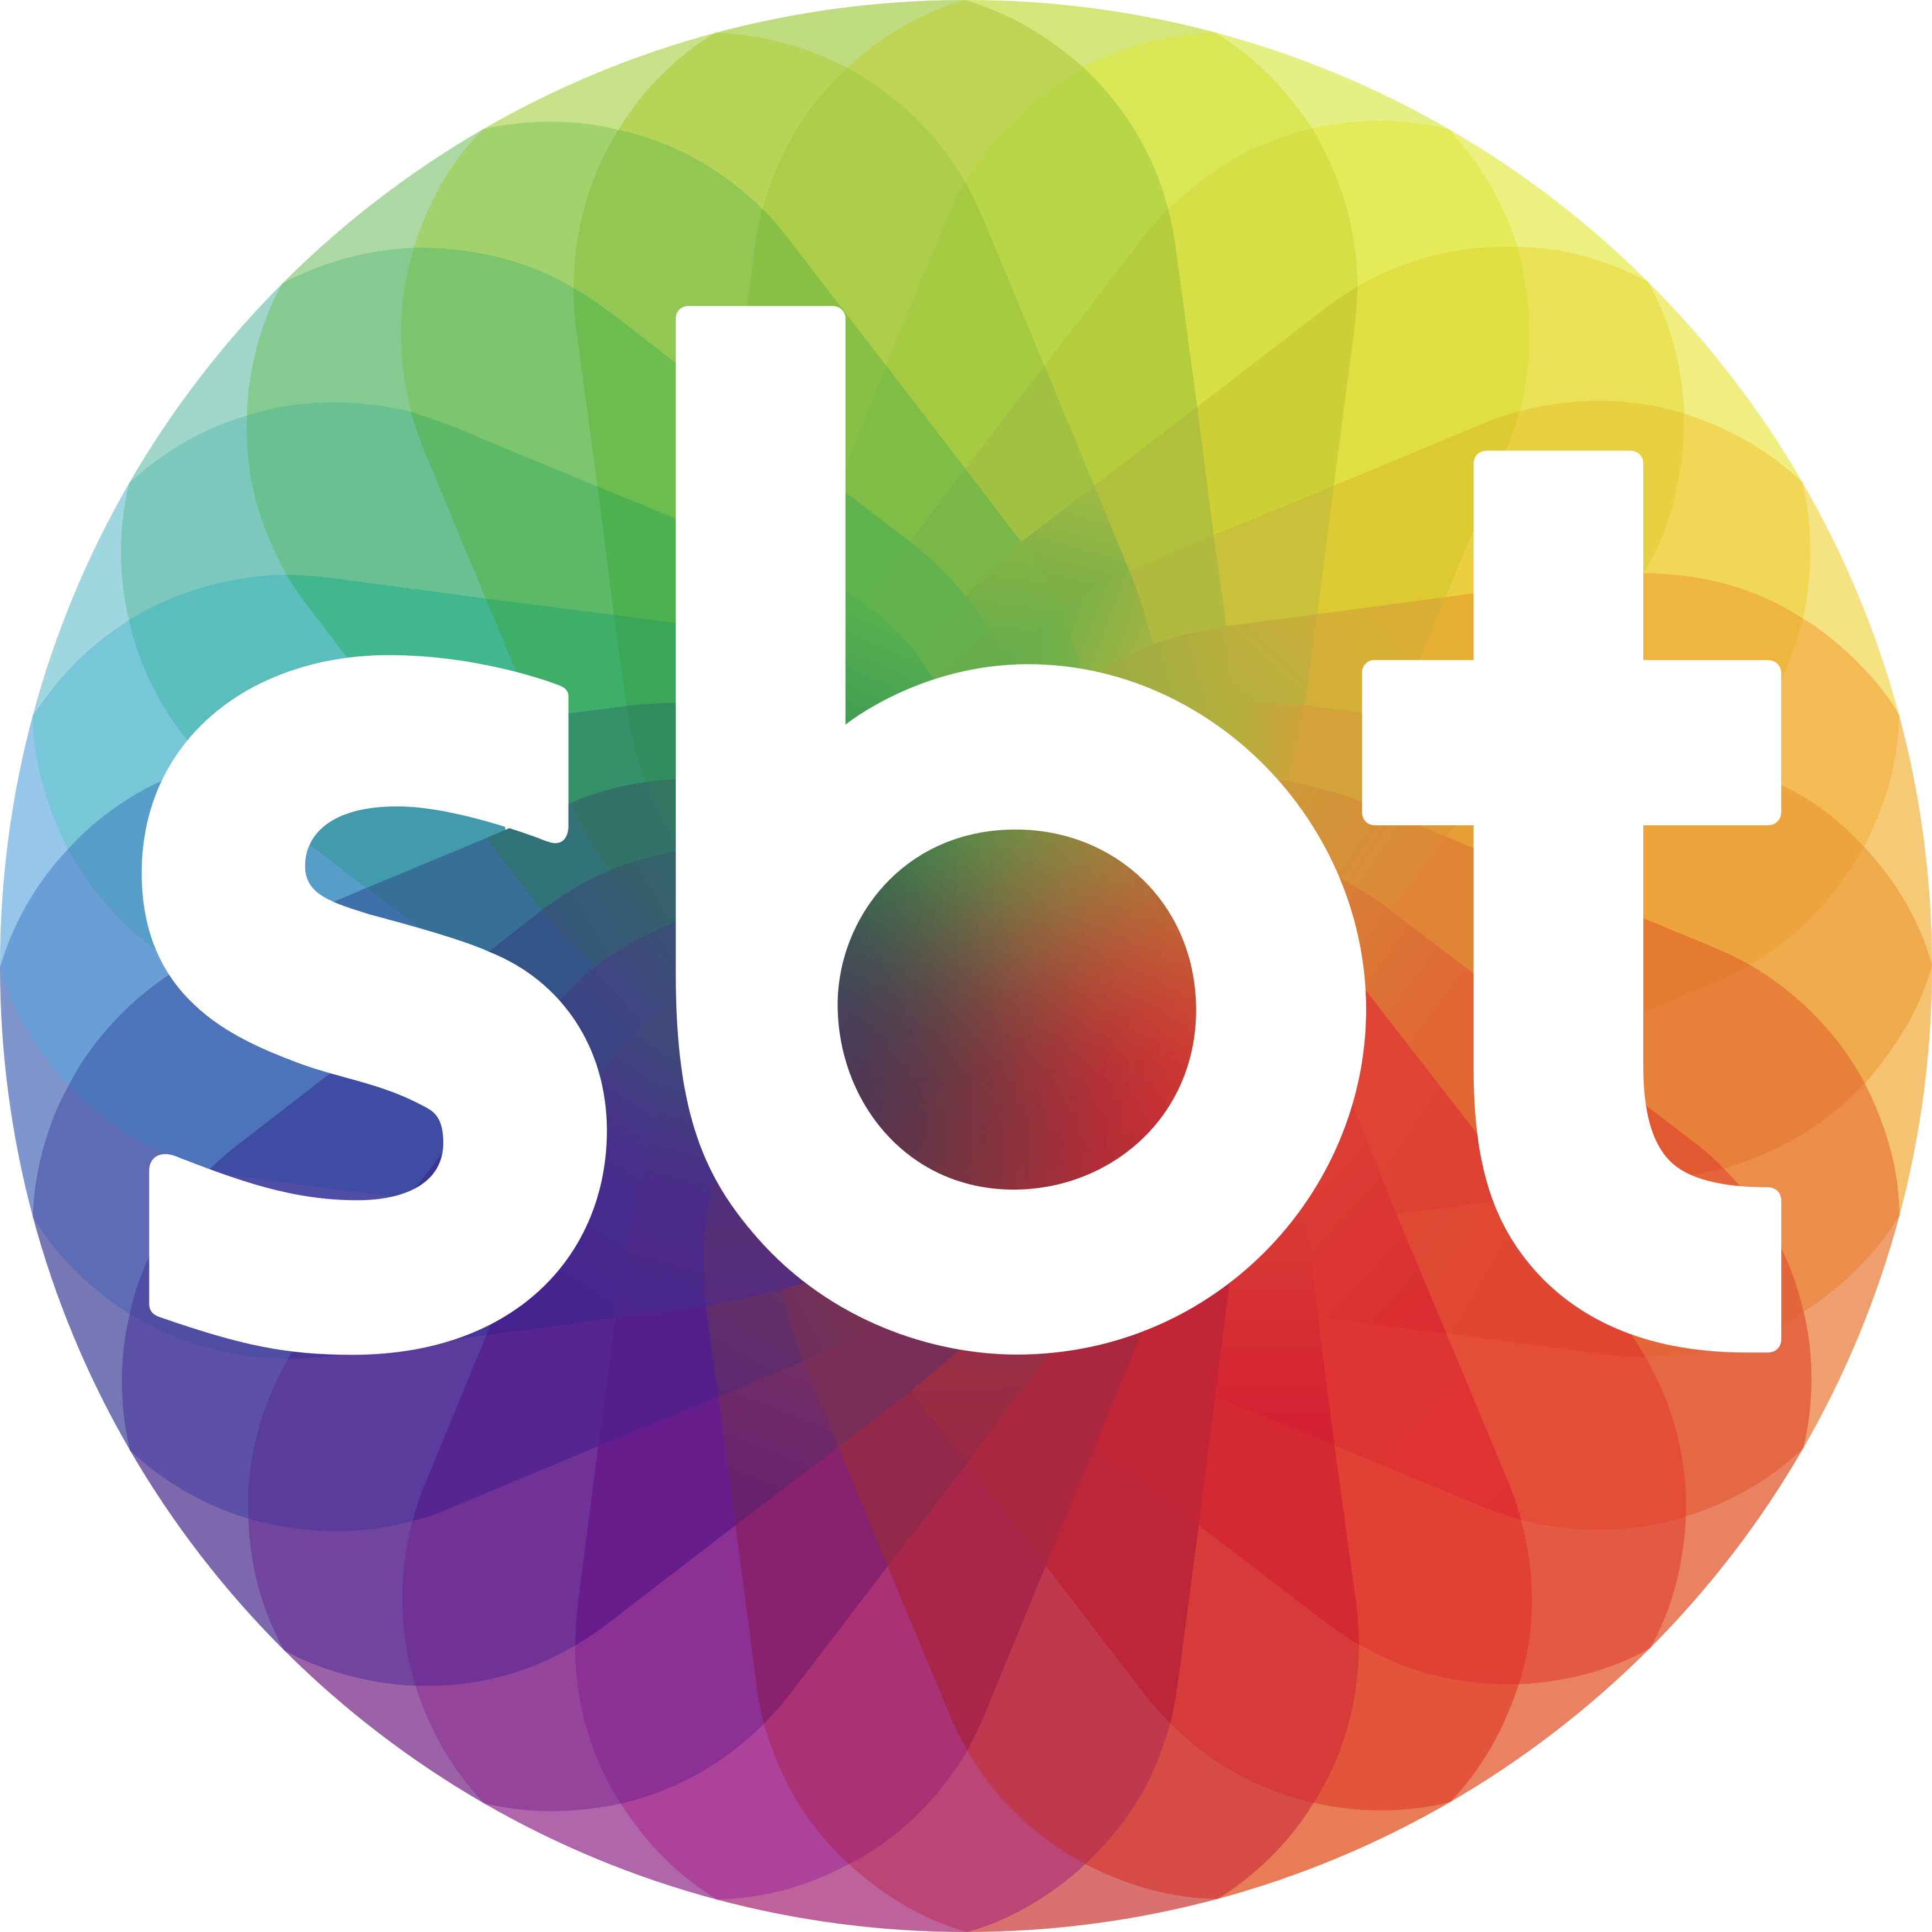 SBT Logo Transparent Image